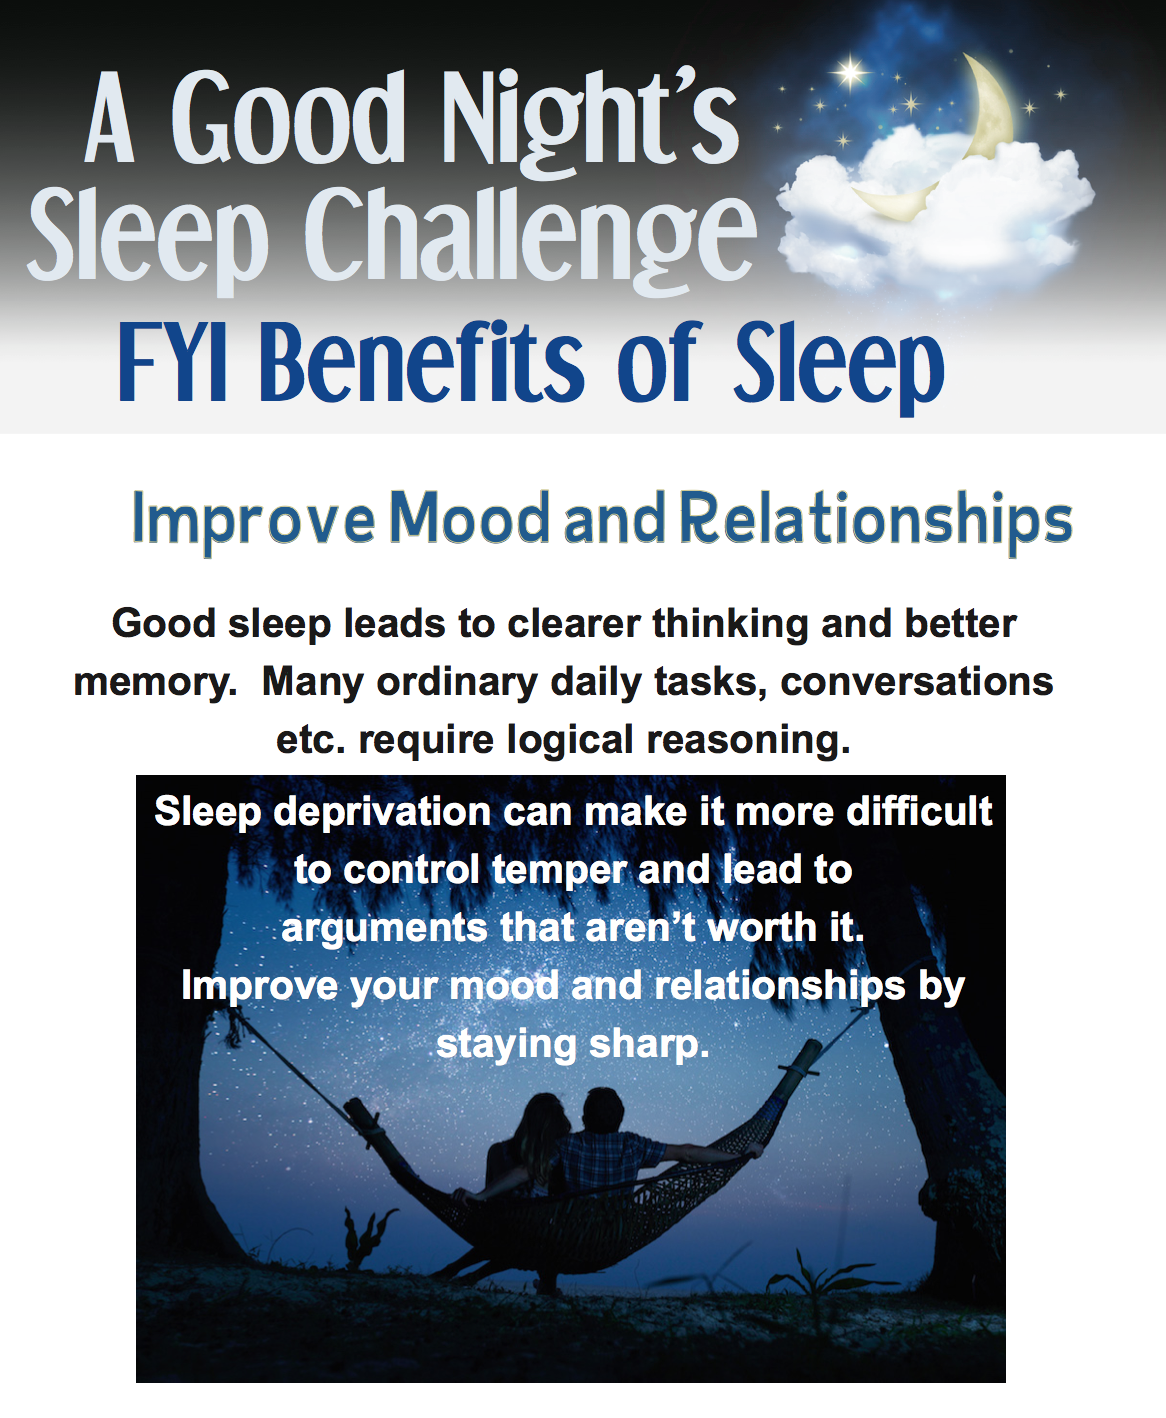 National Sleep Awareness Week tips and campaign